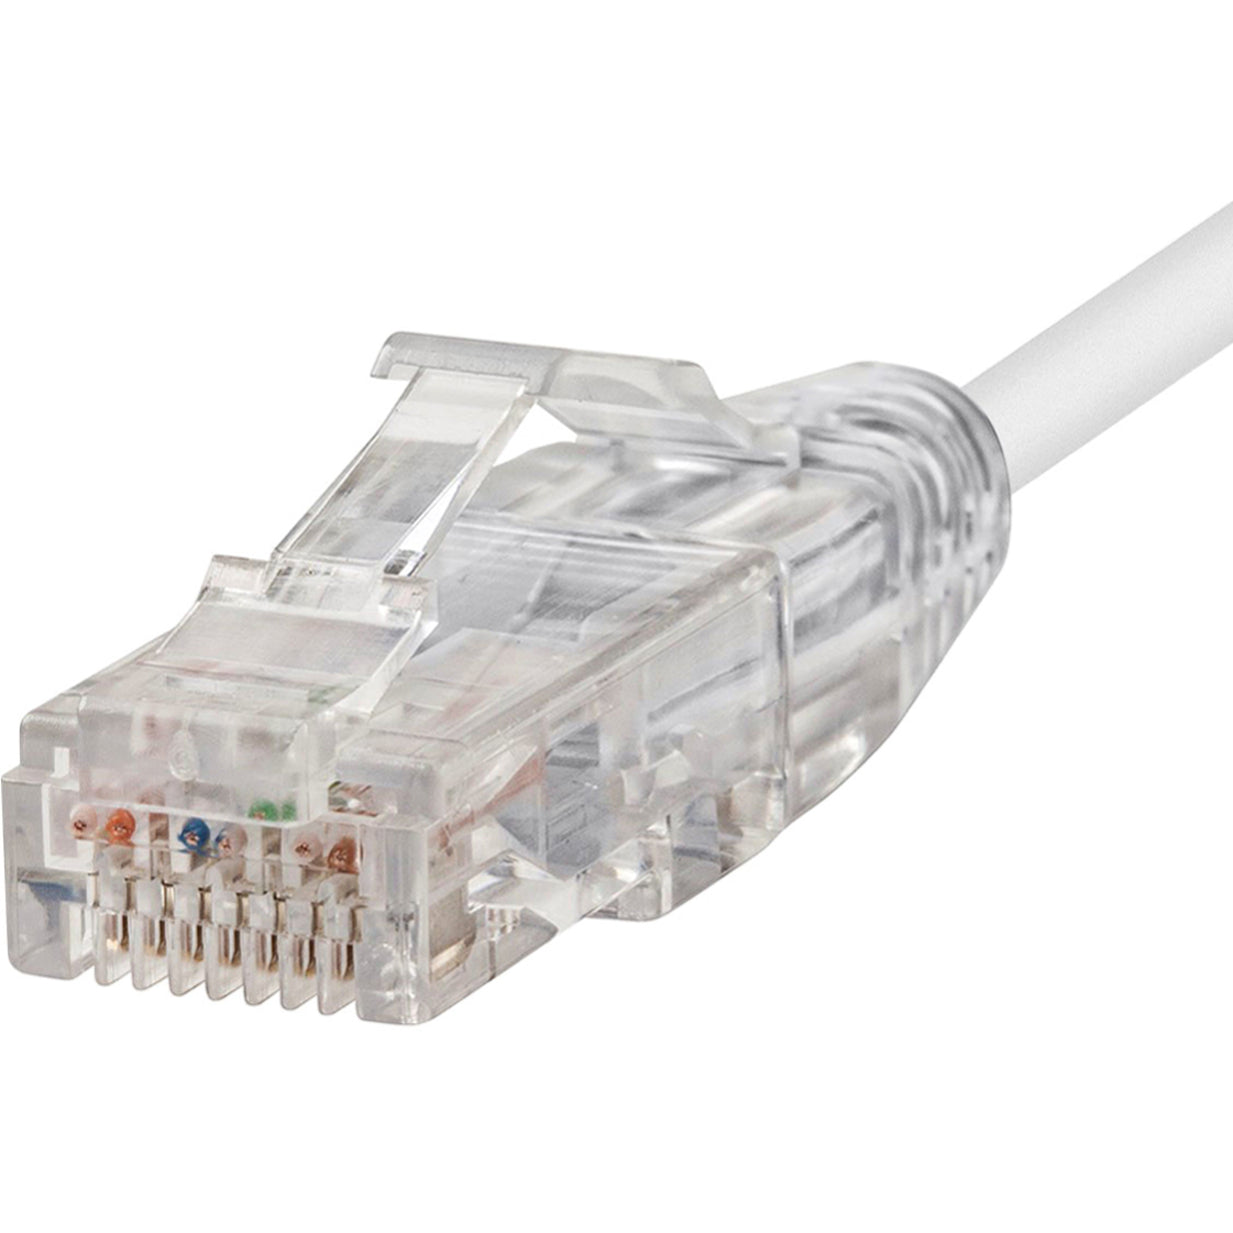 Monoprice 13540 SlimRun Cat6 28AWG UTP Ethernet Network Cable, 7ft White, Flexible, Snagless